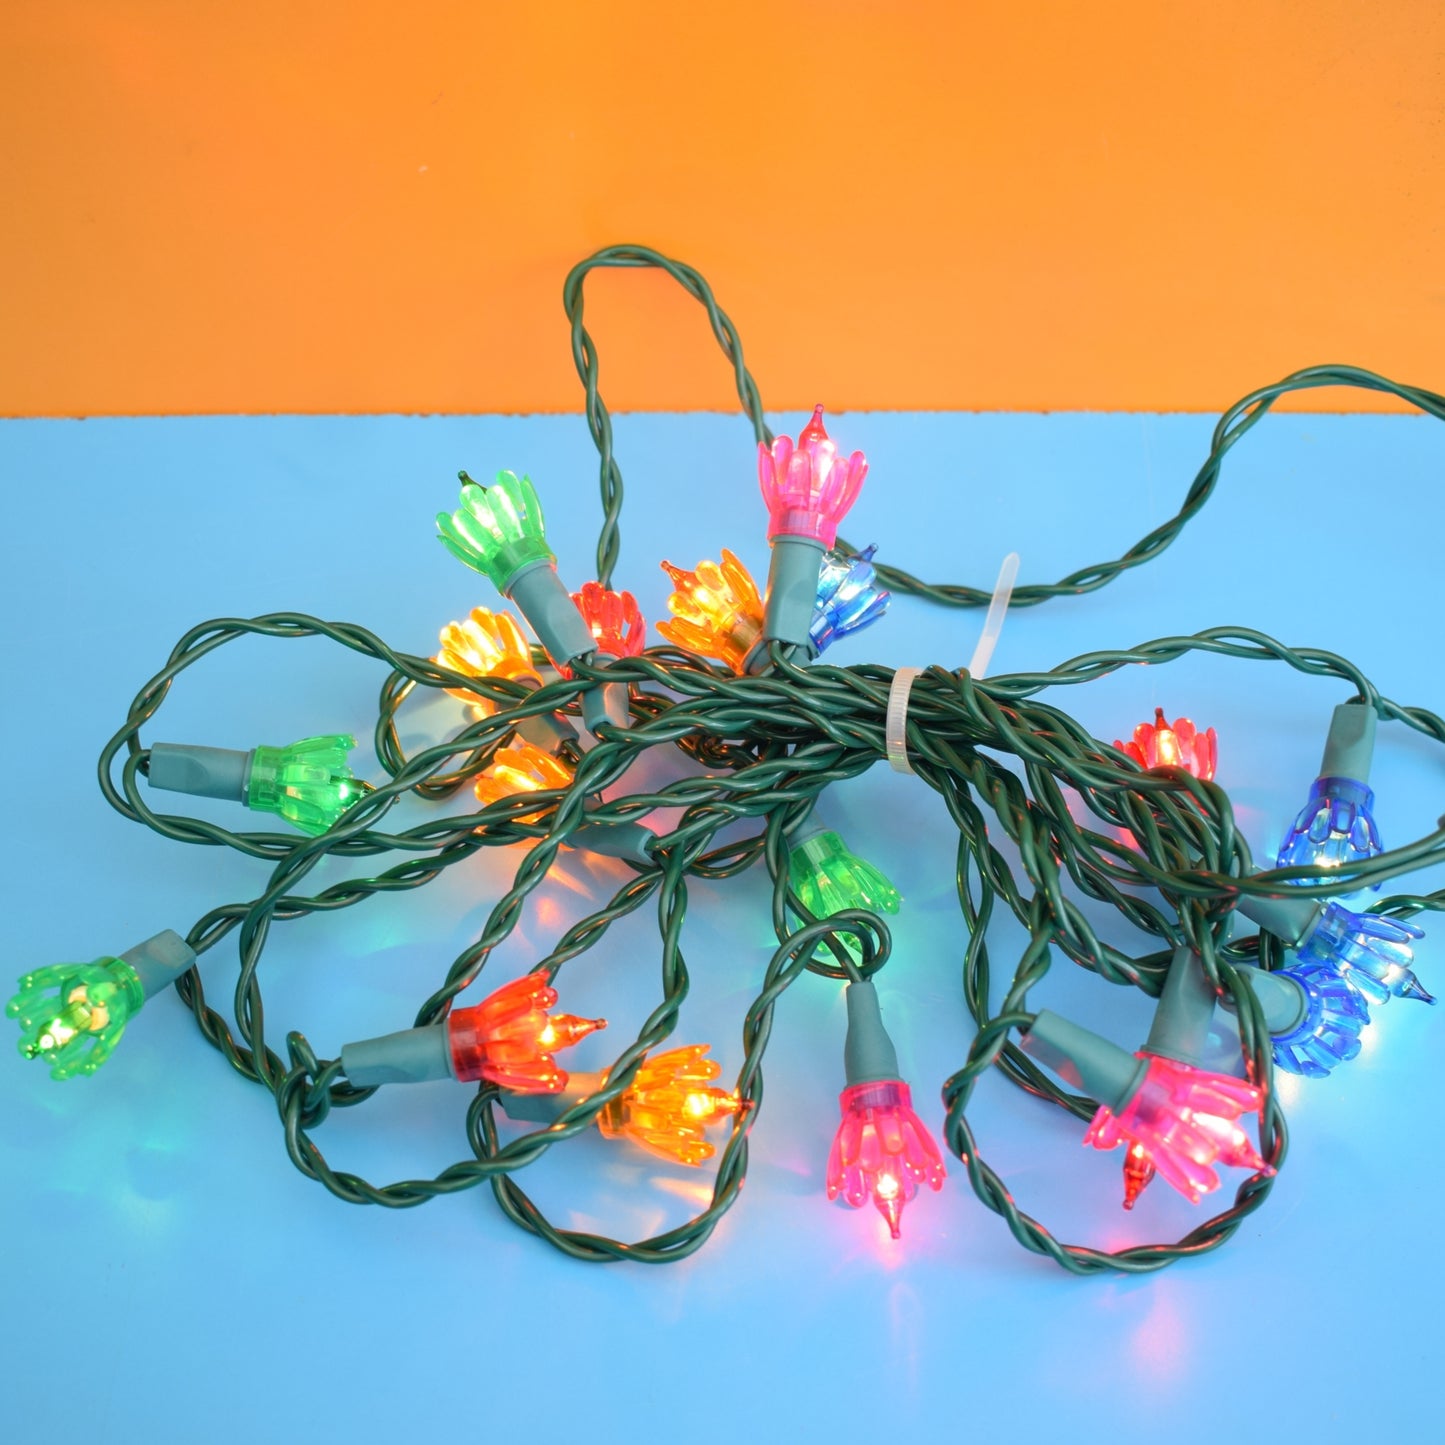 Vintage 1960s Christmas String Lights - Petals